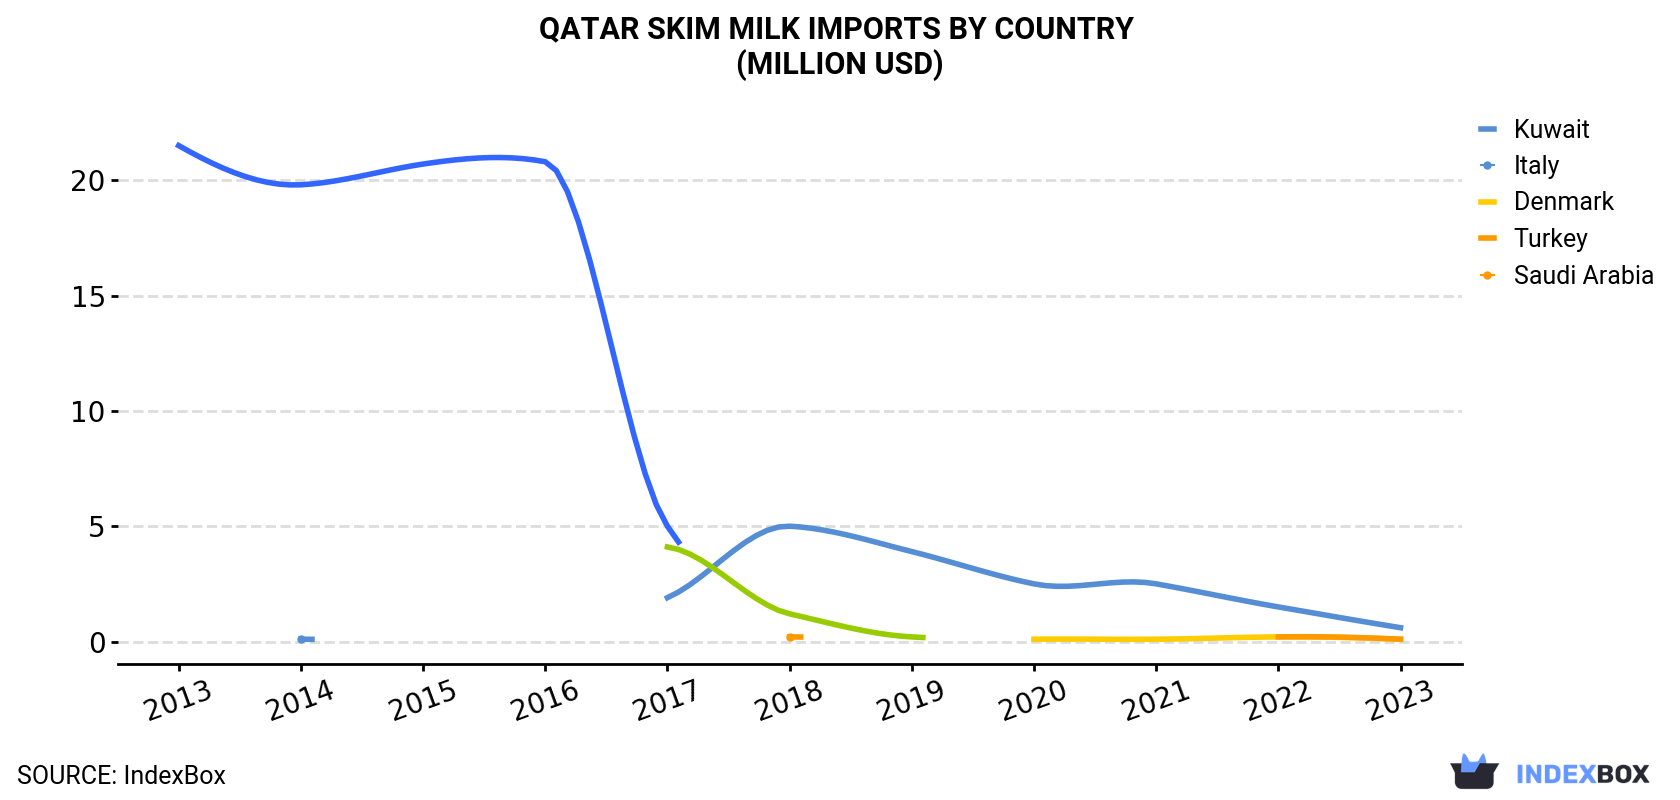 Qatar Skim Milk Imports By Country (Million USD)